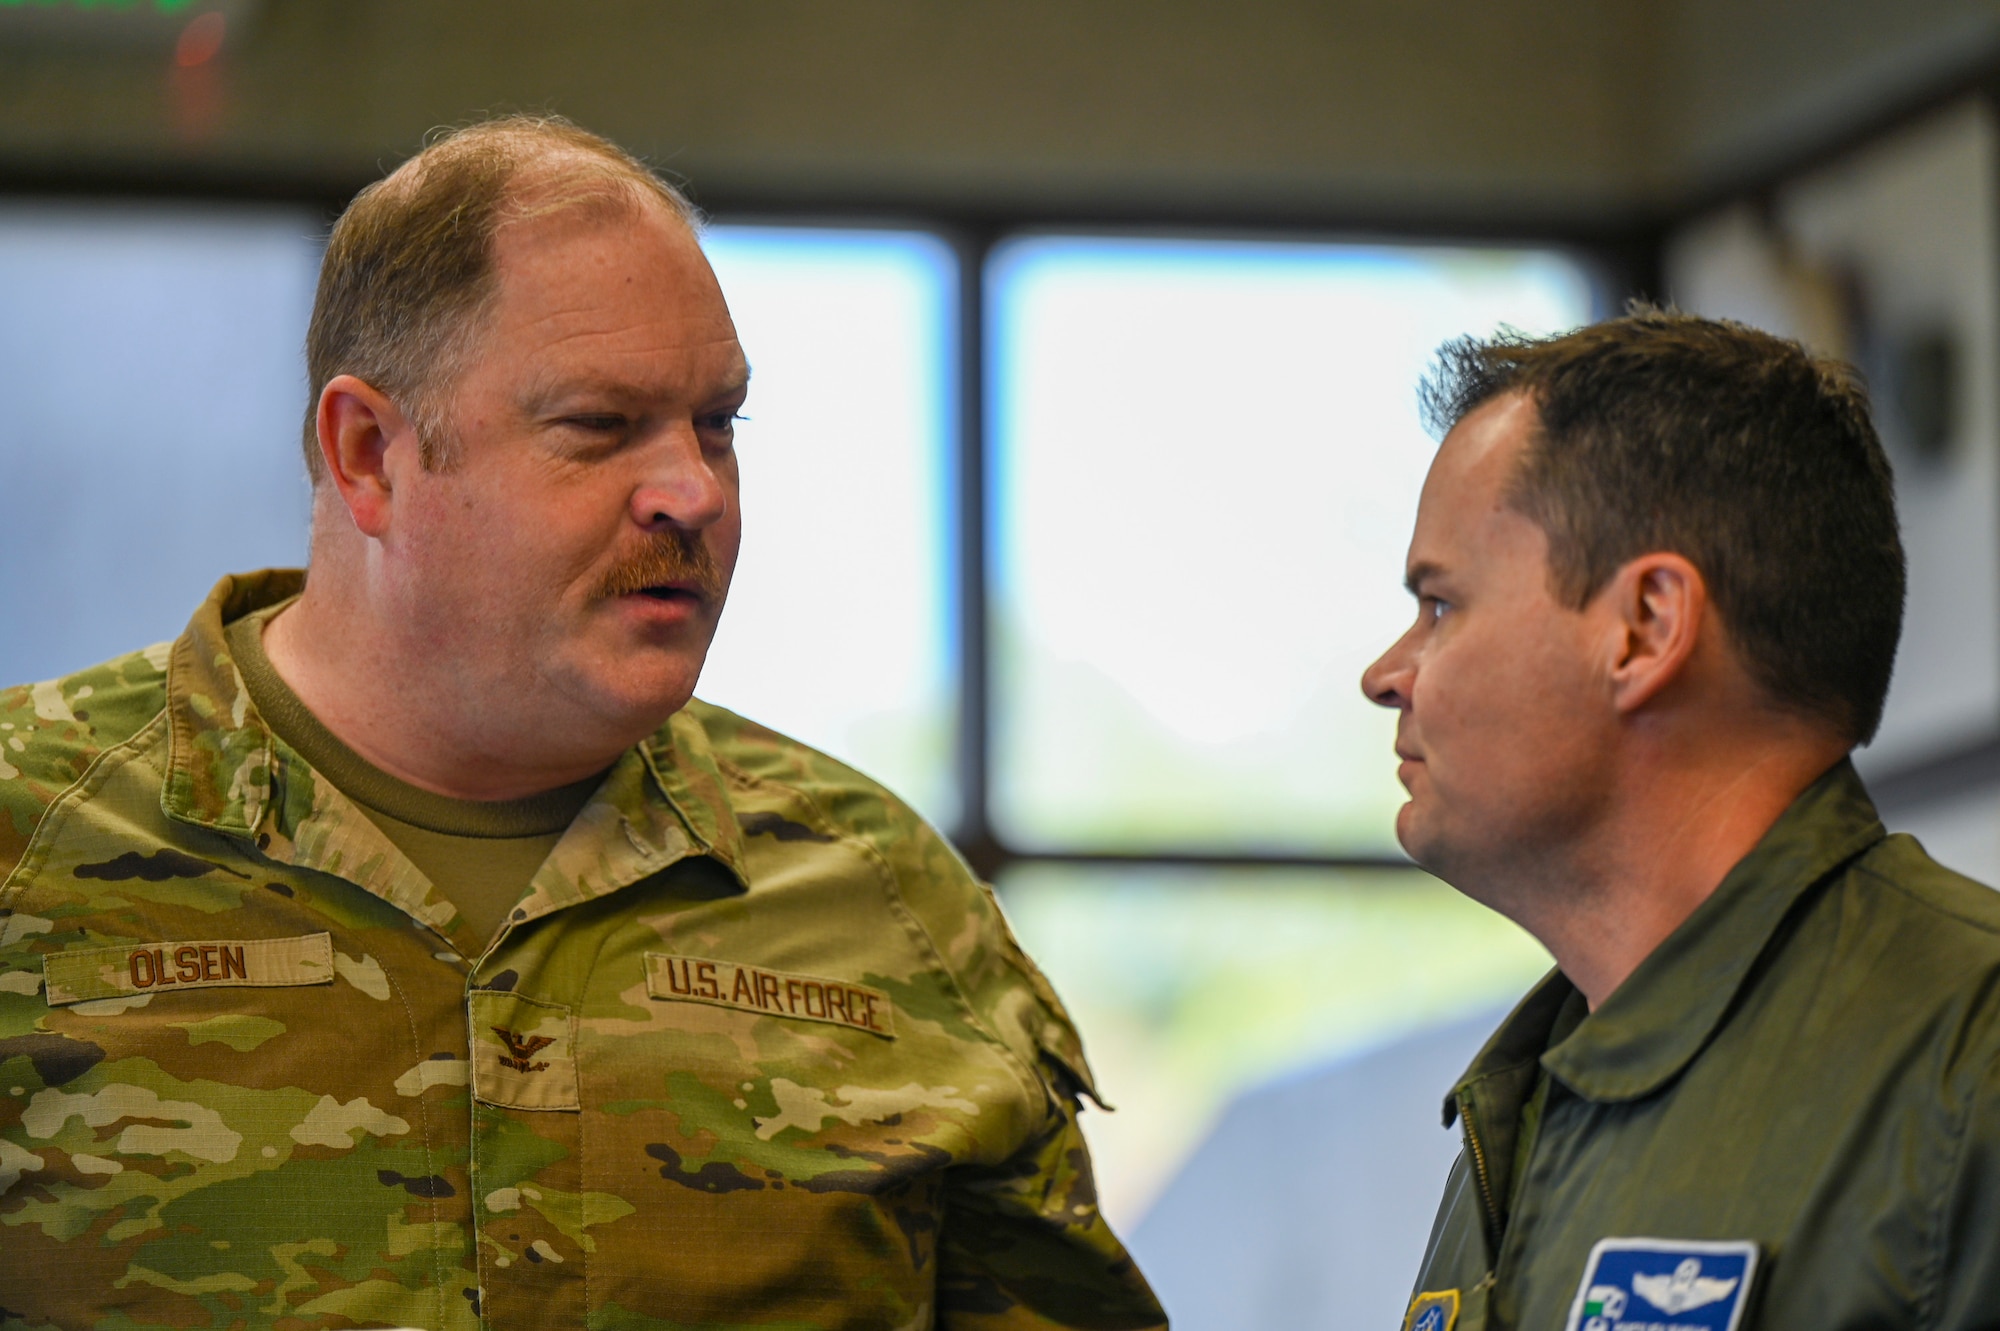 Two military members talk.